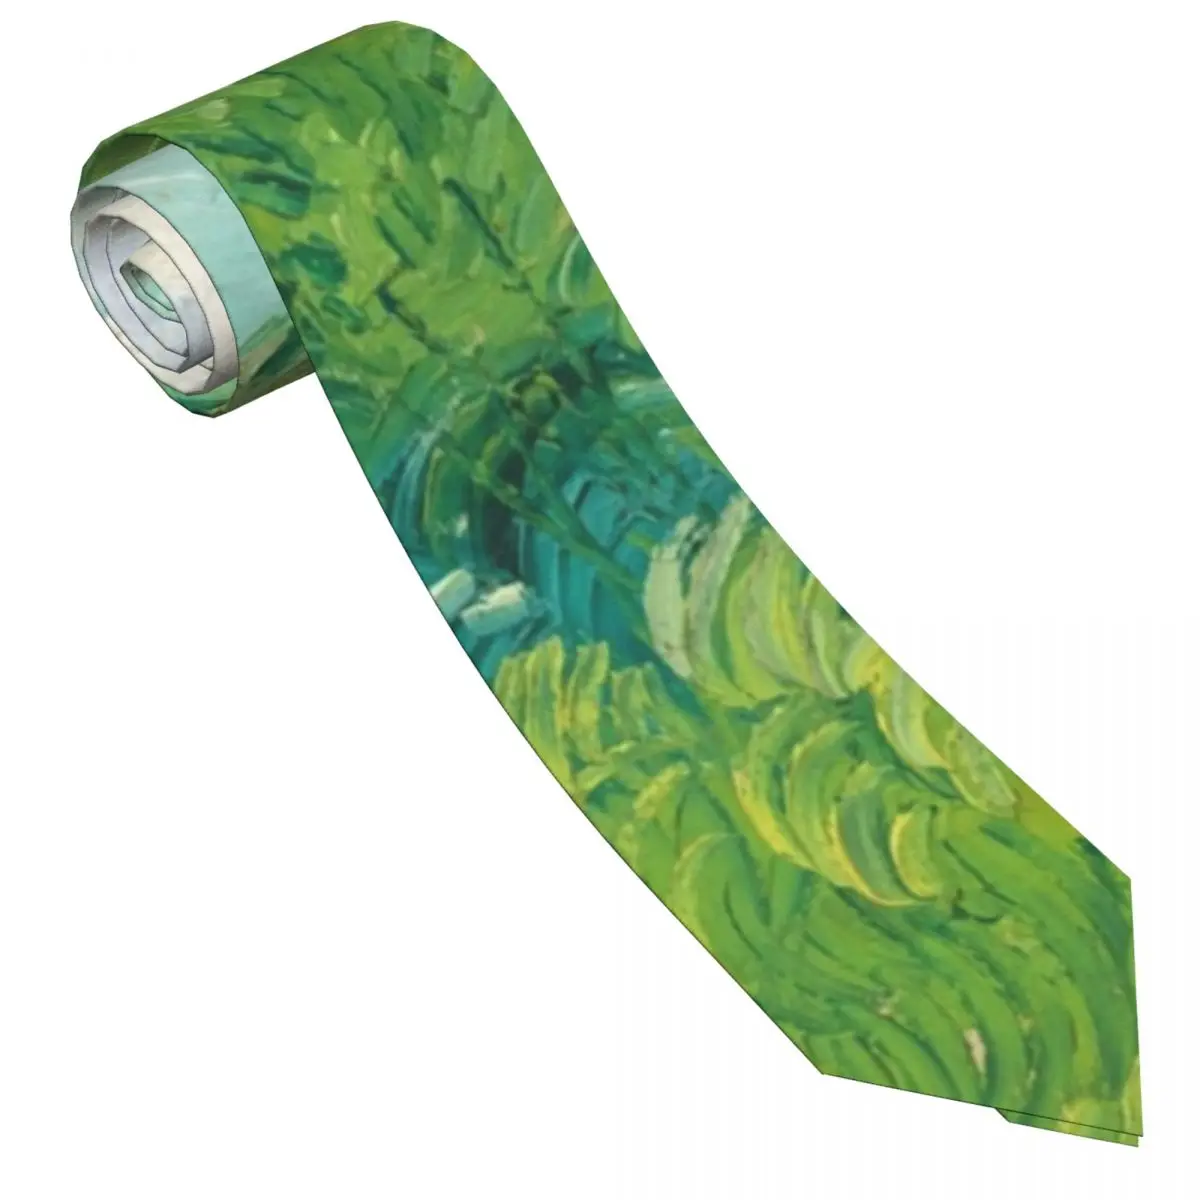 

Men's Tie Green Wheat Fields Neck Ties Vincent Van Gogh Casual Collar Tie Daily Wear Party Quality Necktie Accessories